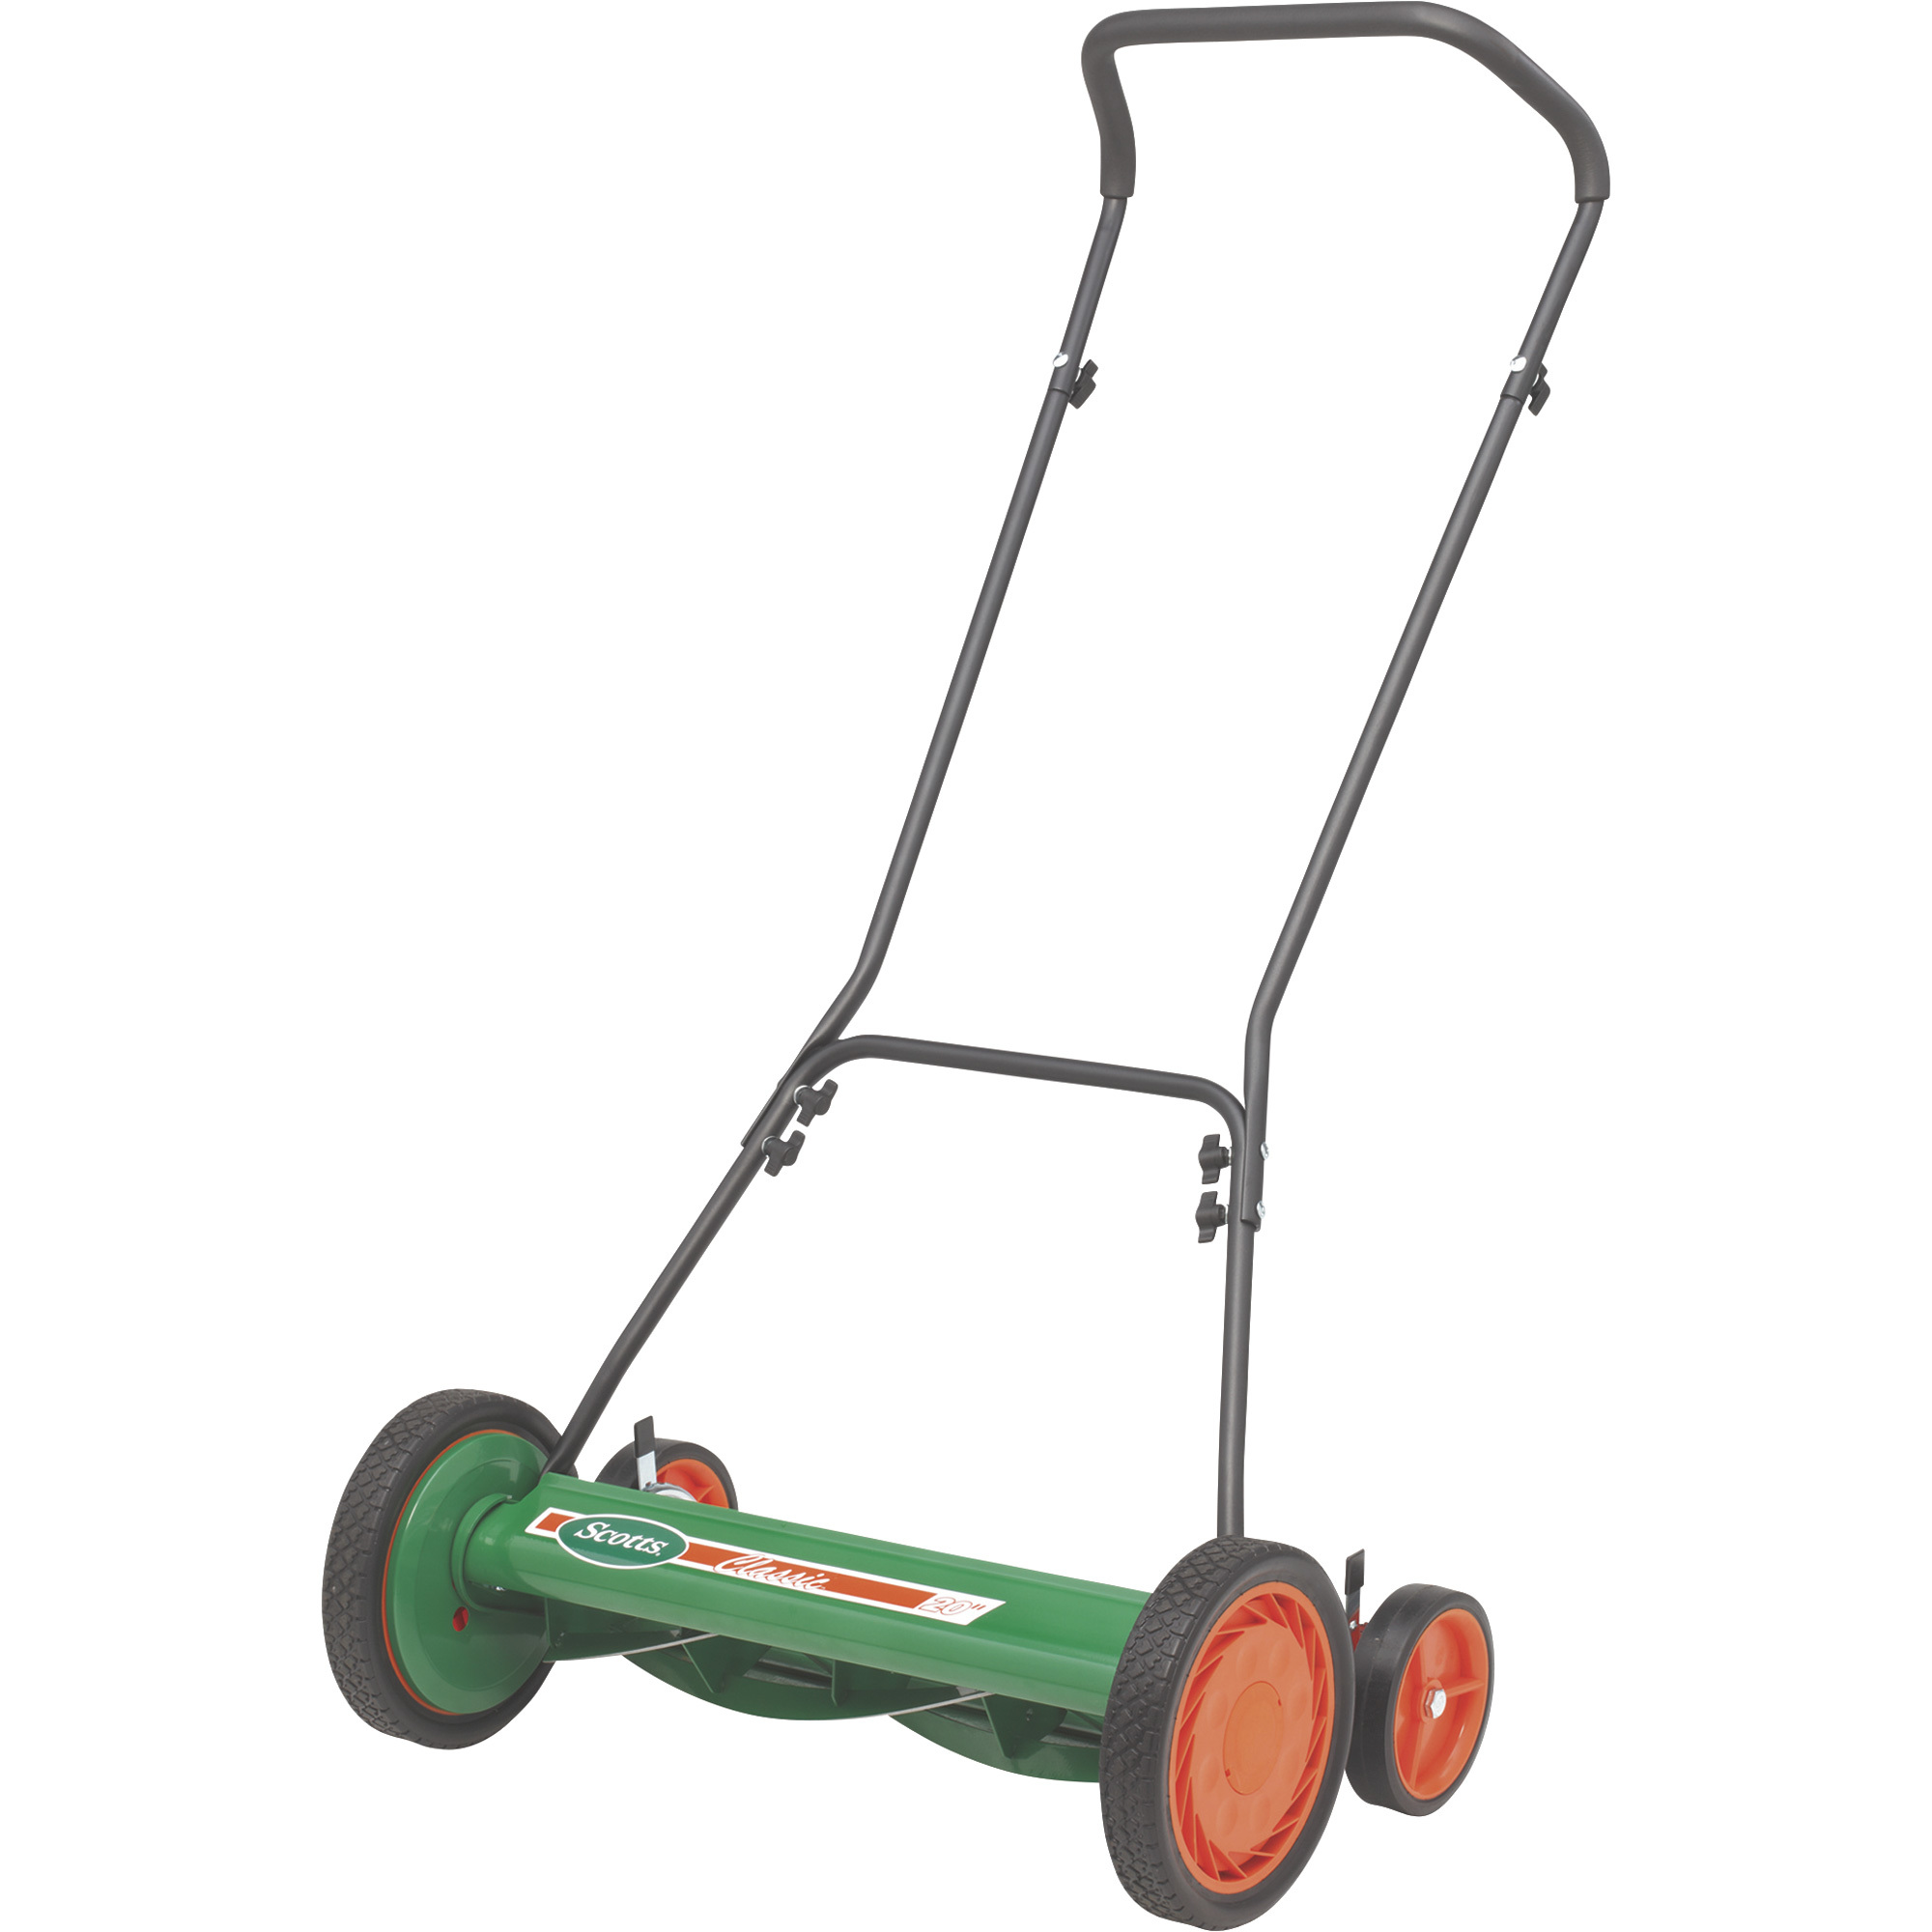 Pro Concept Lawn Mower Manual